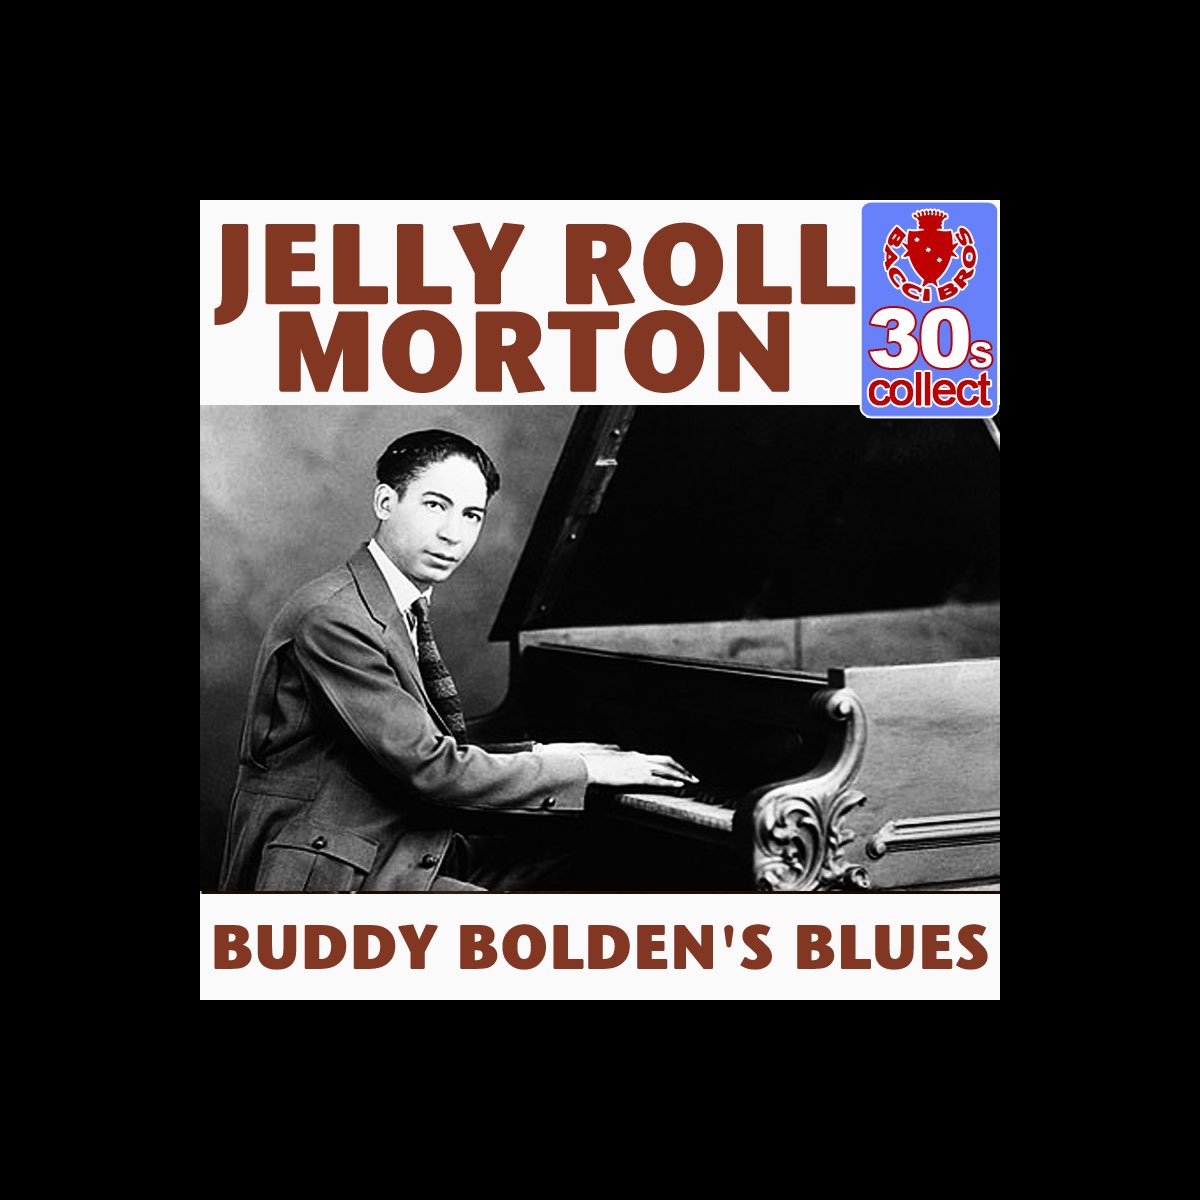 Buddy Bolden's blues - Single - Album by Jelly Roll Morton - Apple Music